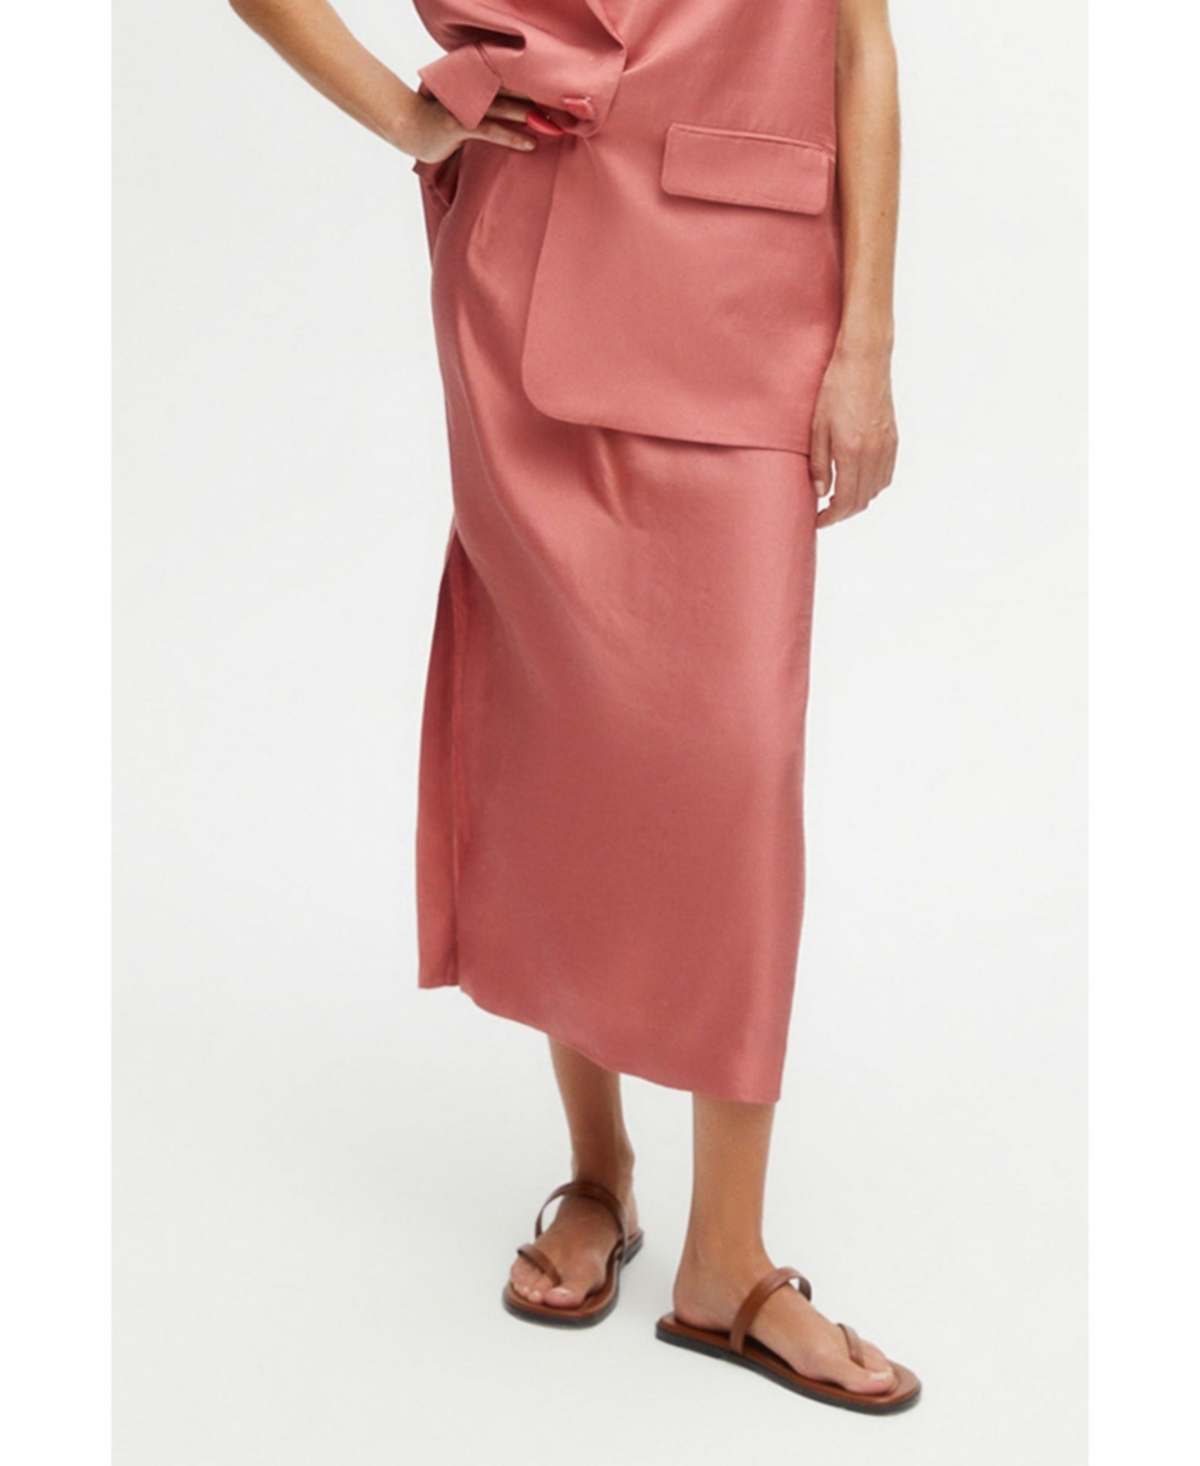 Women's Midi Skirt with Slits - Salmon